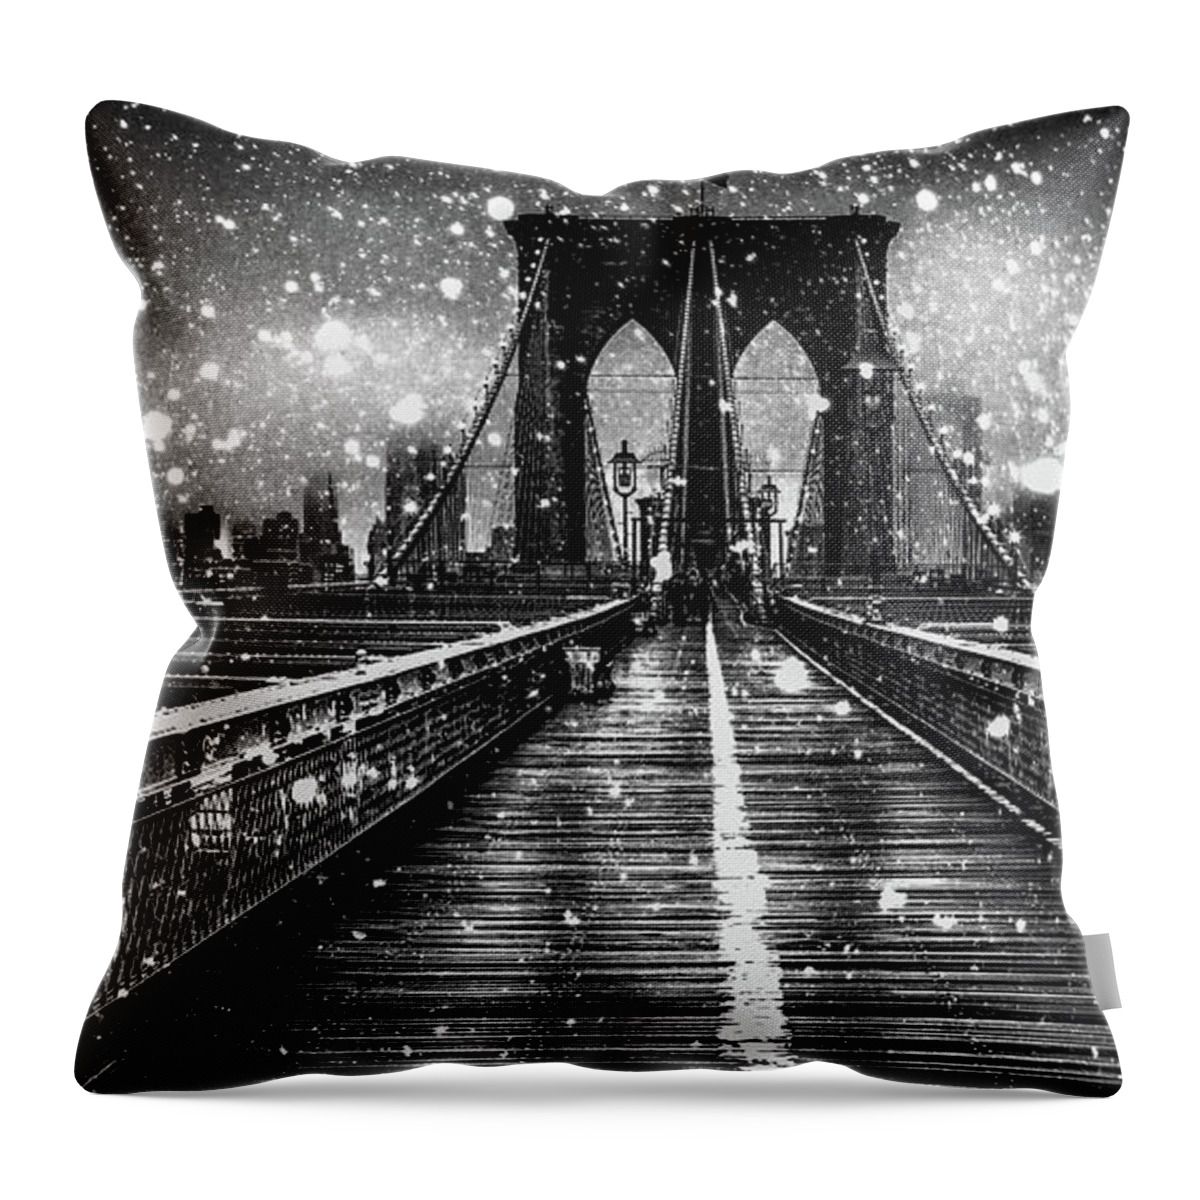 Snow Throw Pillow featuring the digital art Snow Collection Set 05 by Az Jackson